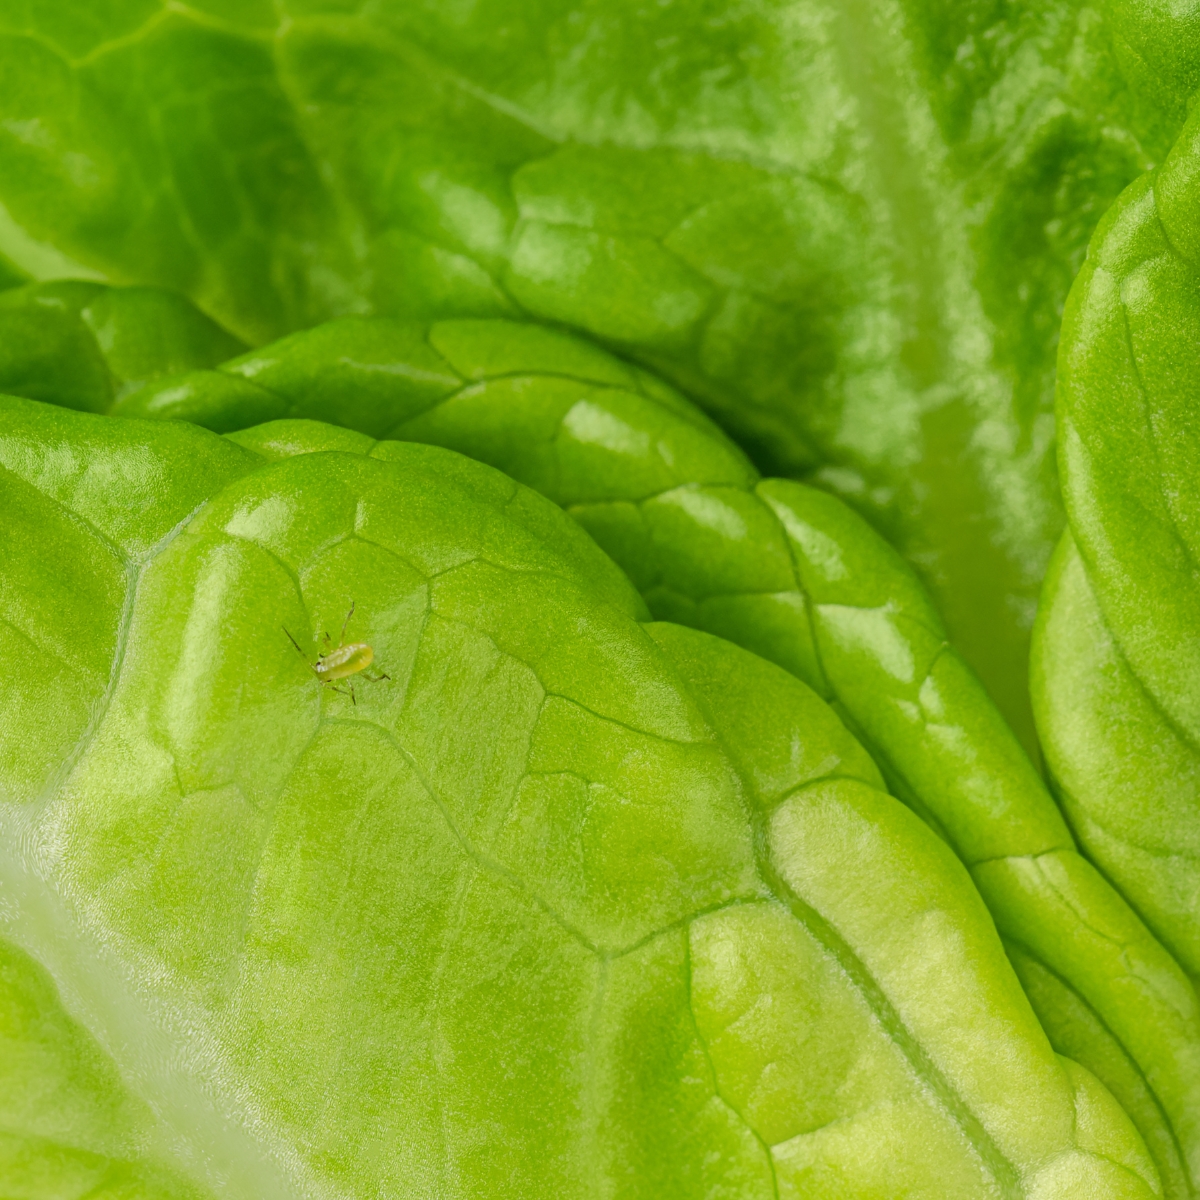 aphid on lettuce leaf